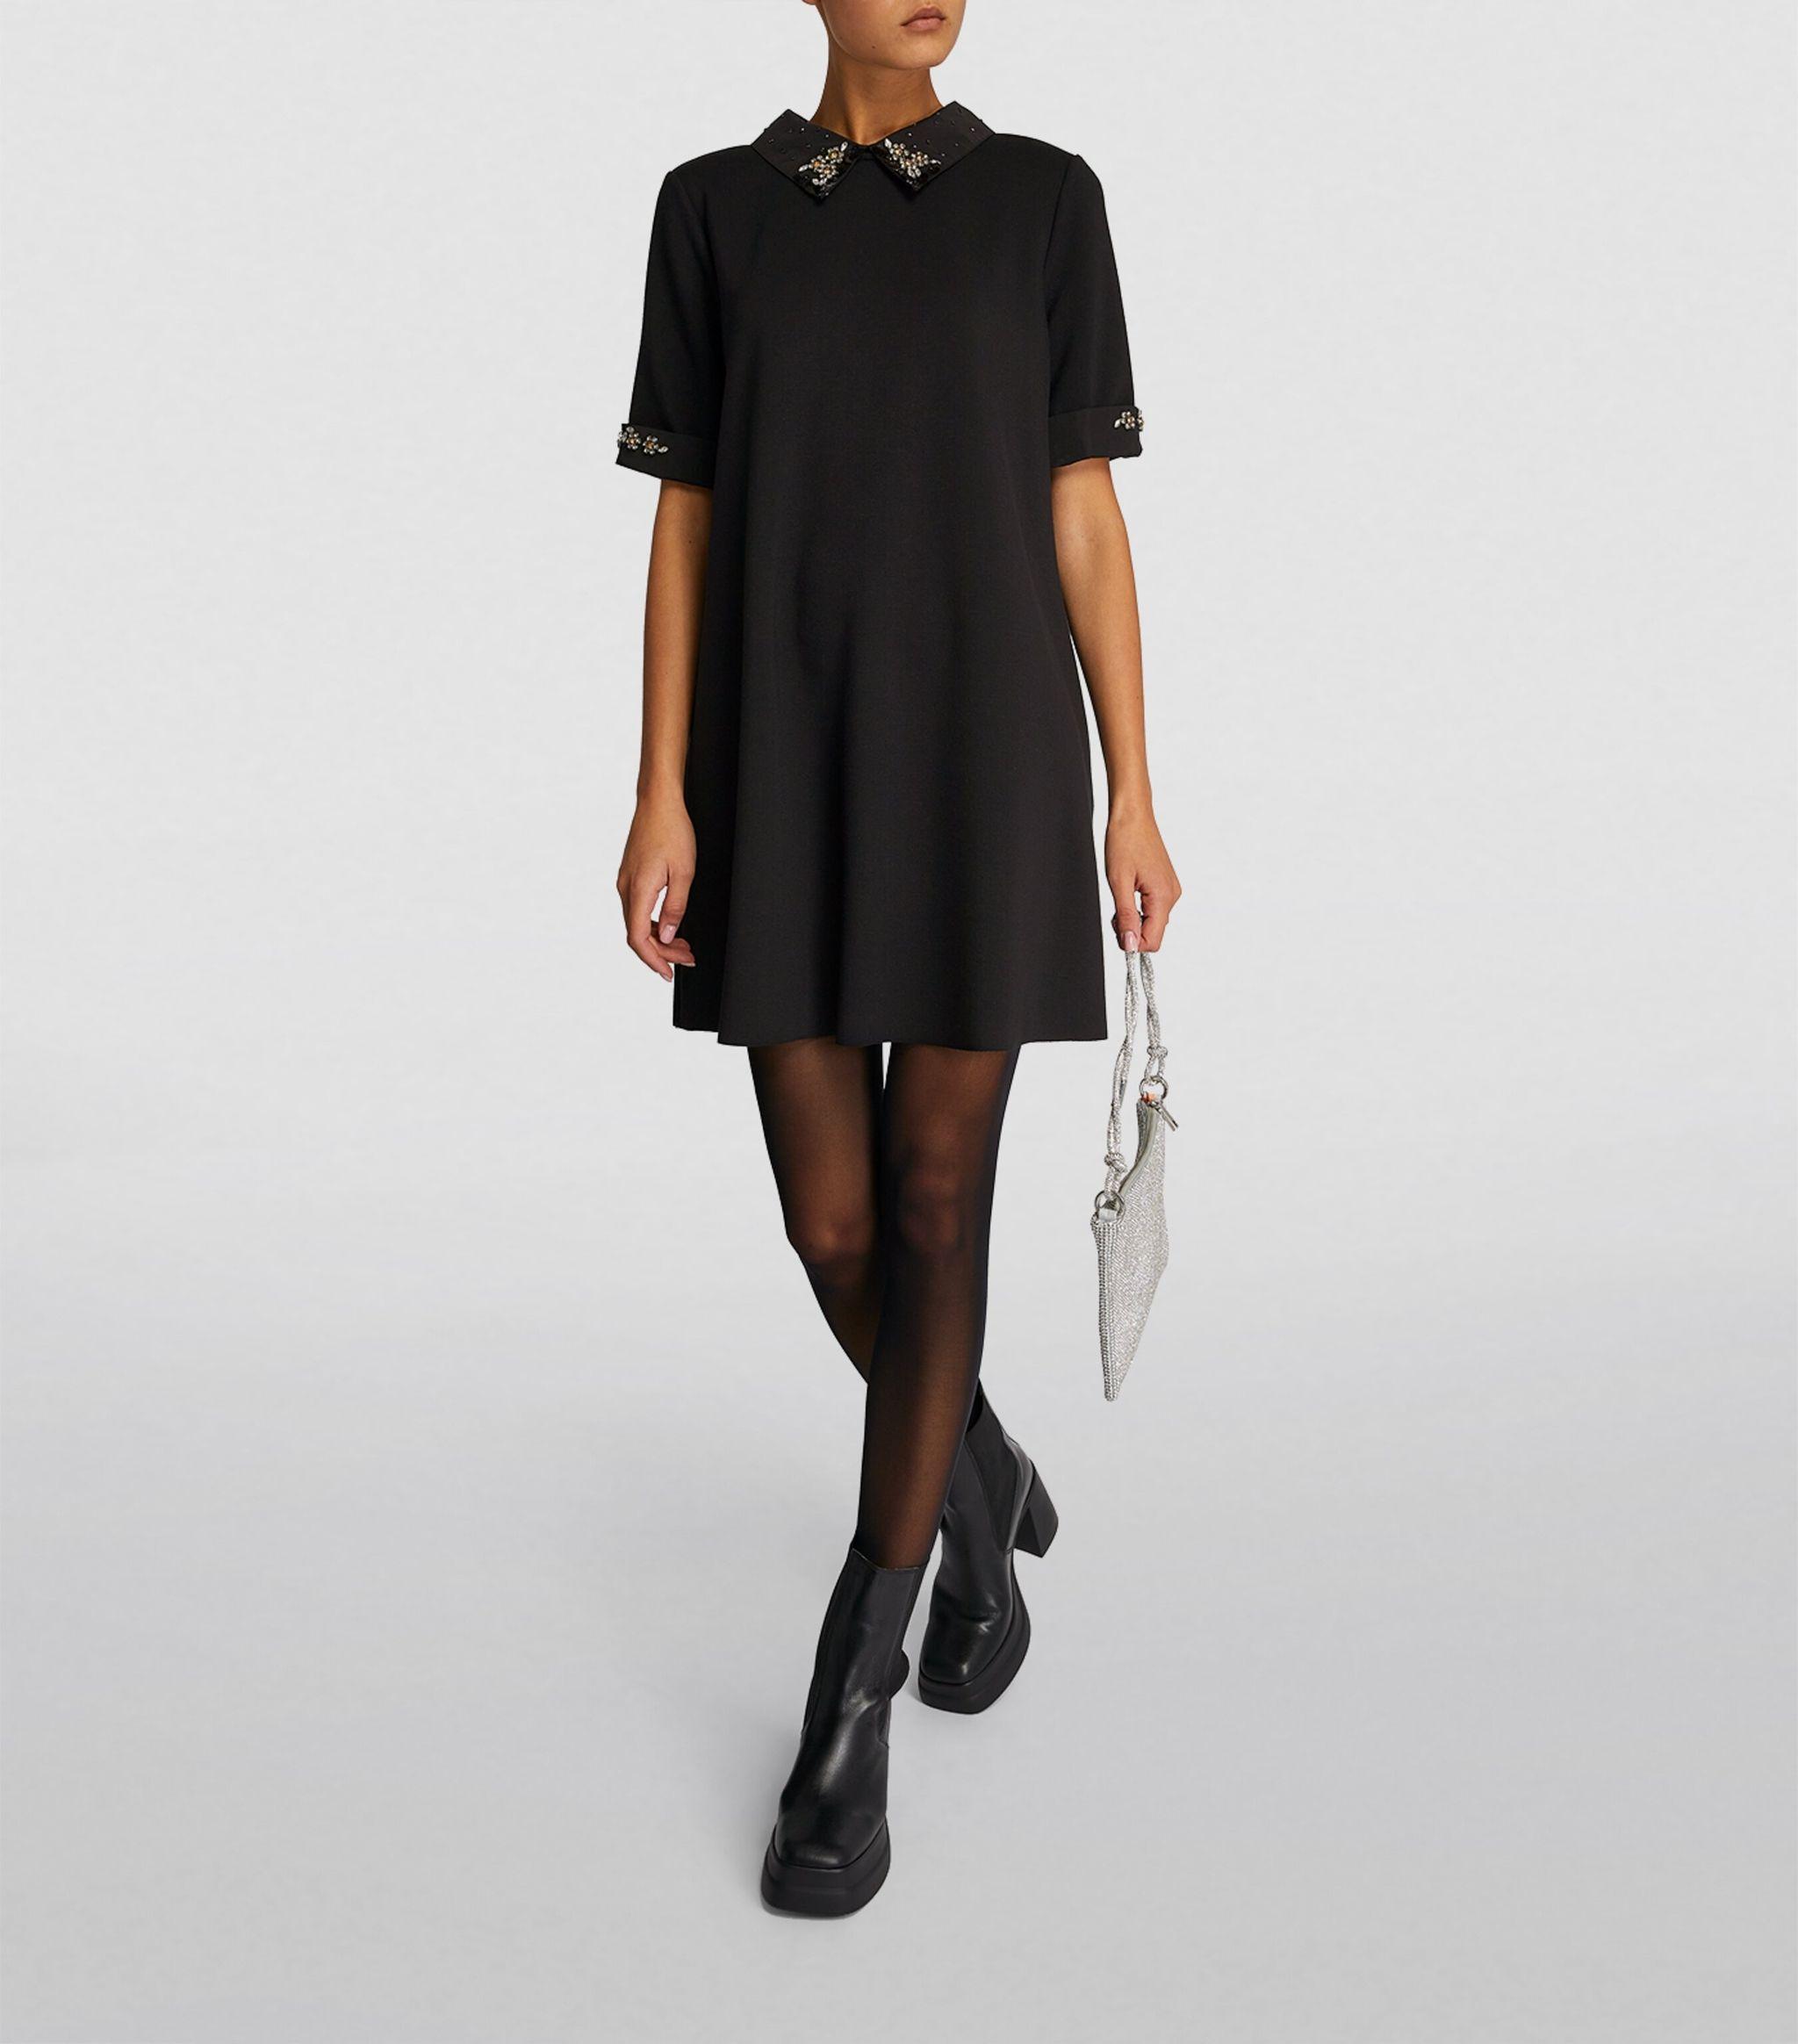 MAX&Co. Embellished Shift Dress in Black | Lyst